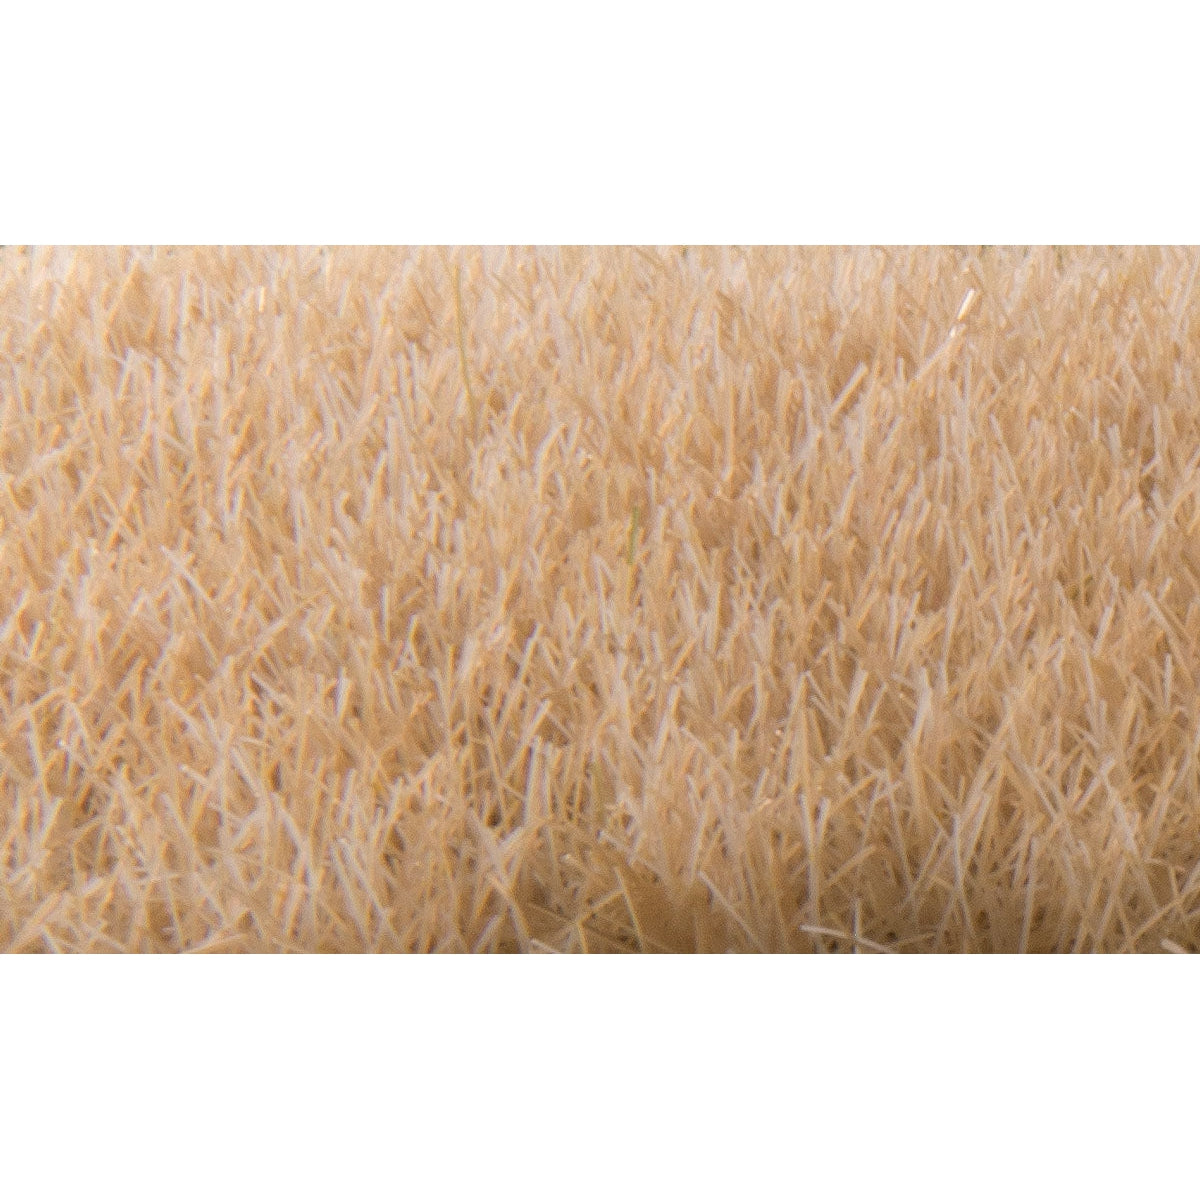 Woodland Scenics Static Grass Straw 7mm